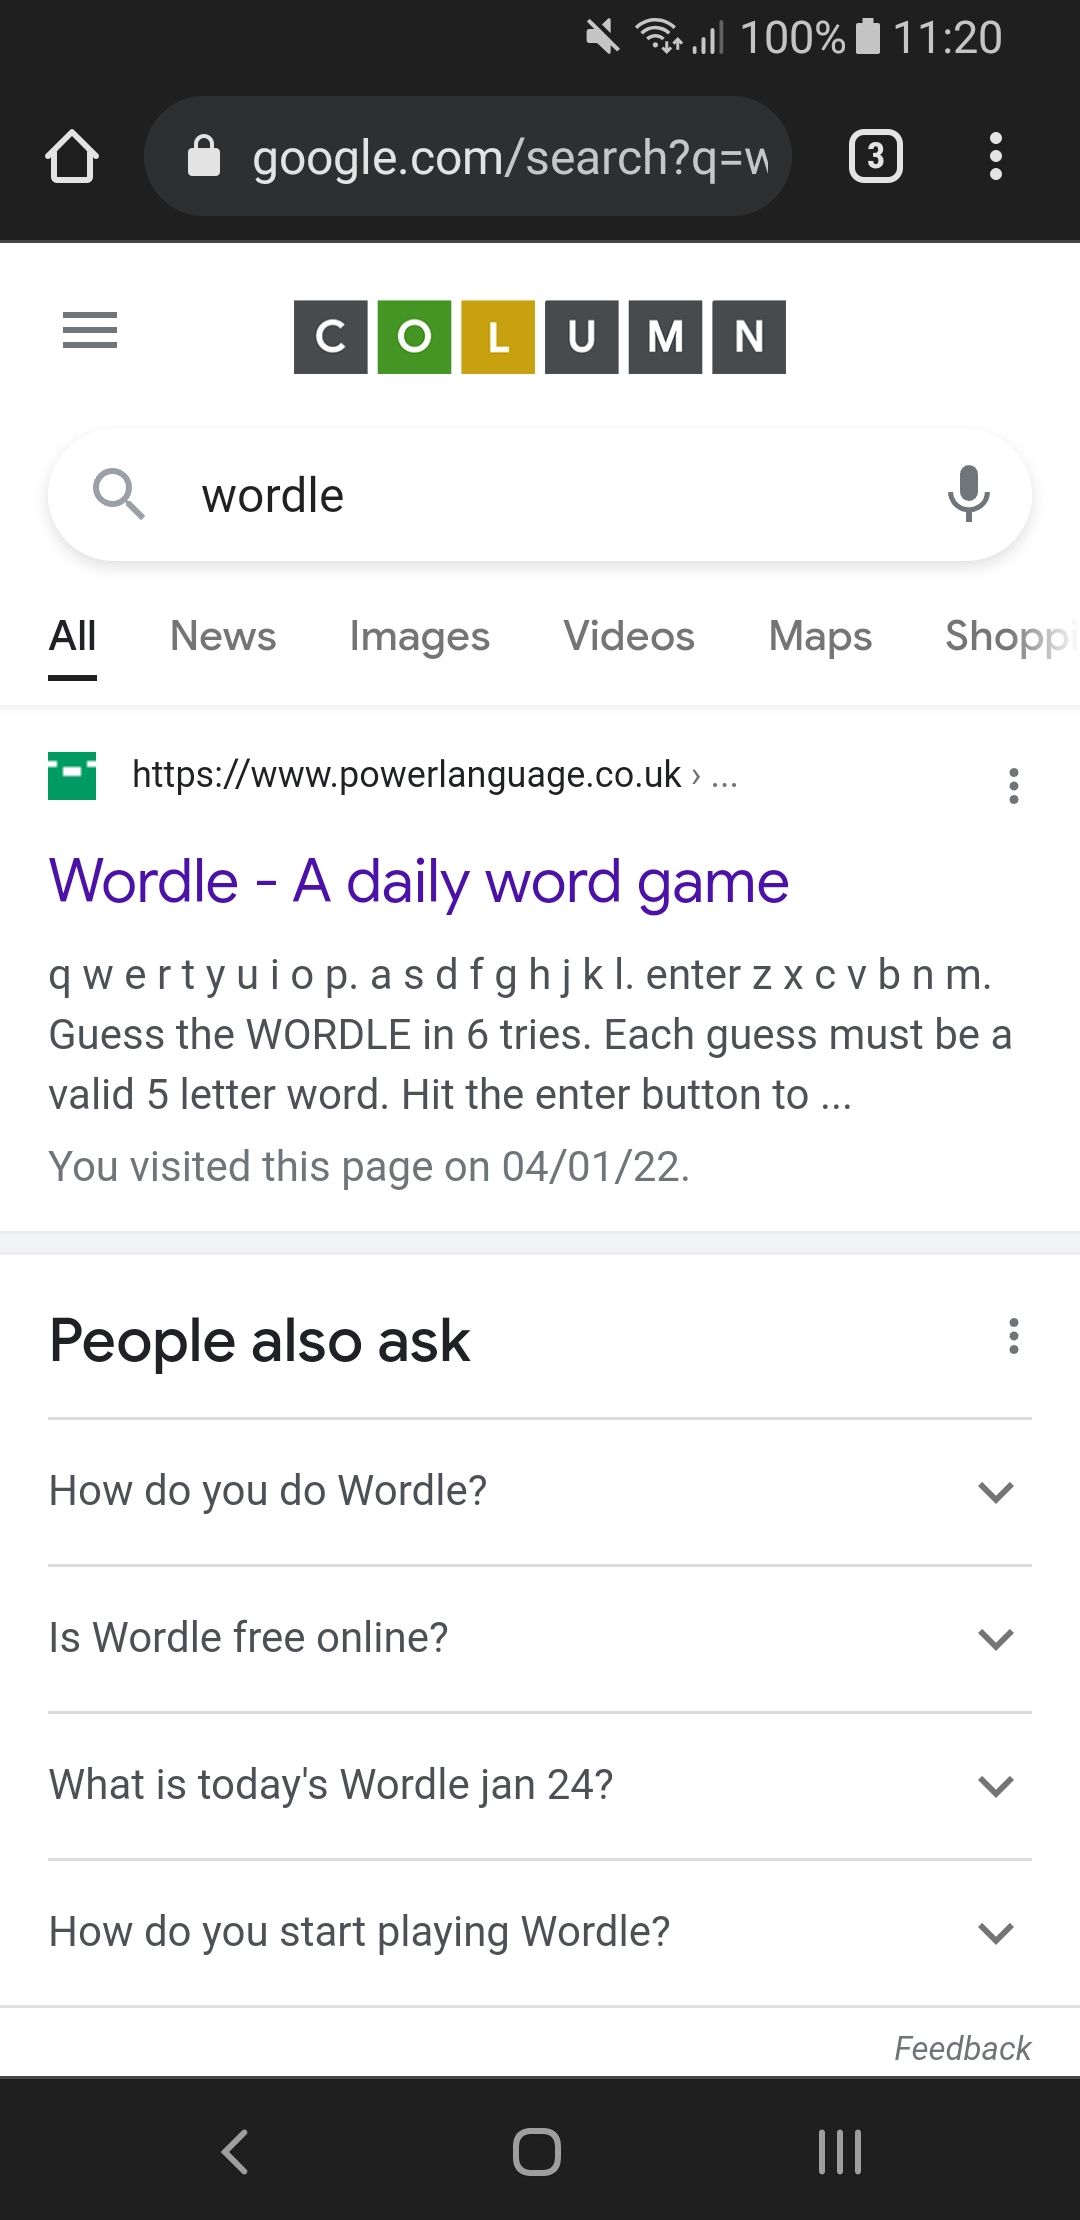 google search wordle - logo shows column